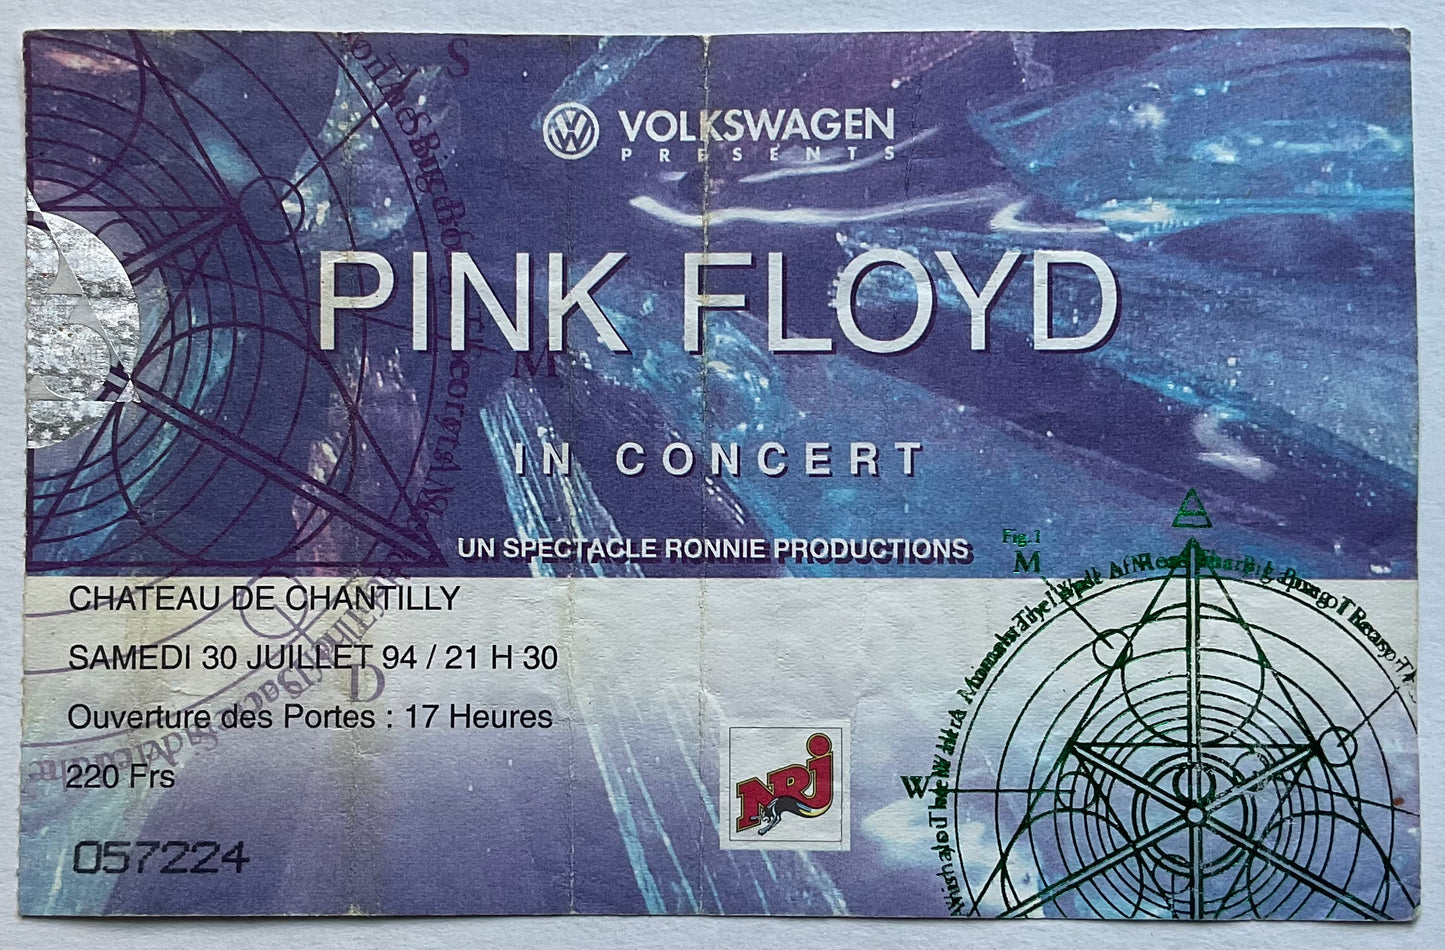 Pink Floyd Original Used Concert Ticket Chateau de Chantilly 20th Jul 1994